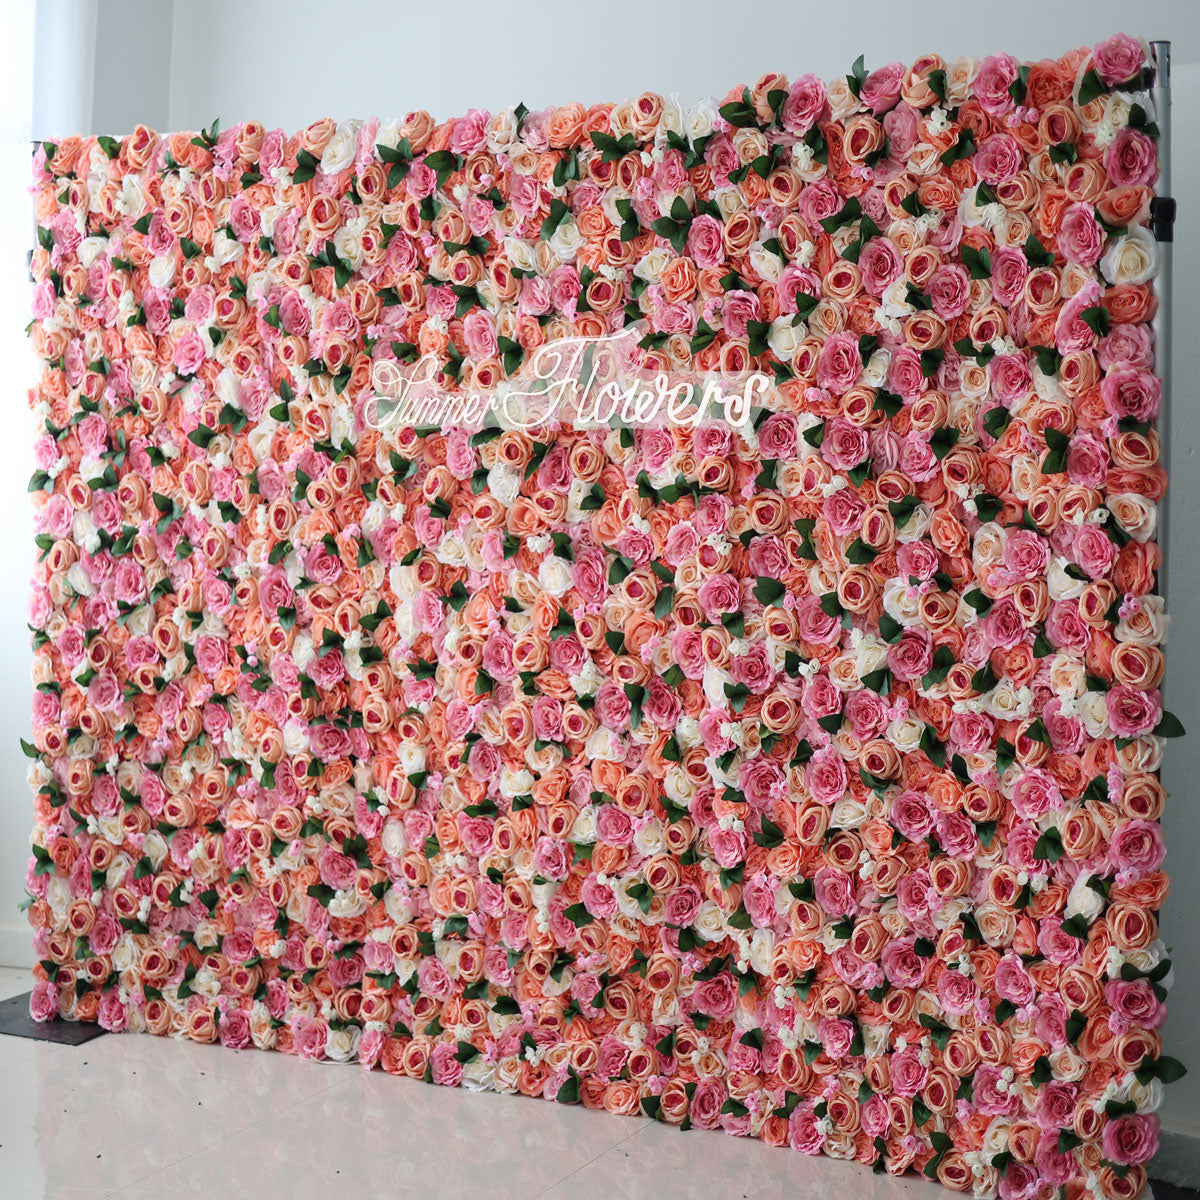 Summer Flower:CB-189 8ft*8ft Cloth Back Artificial Flower Wall Backdrop